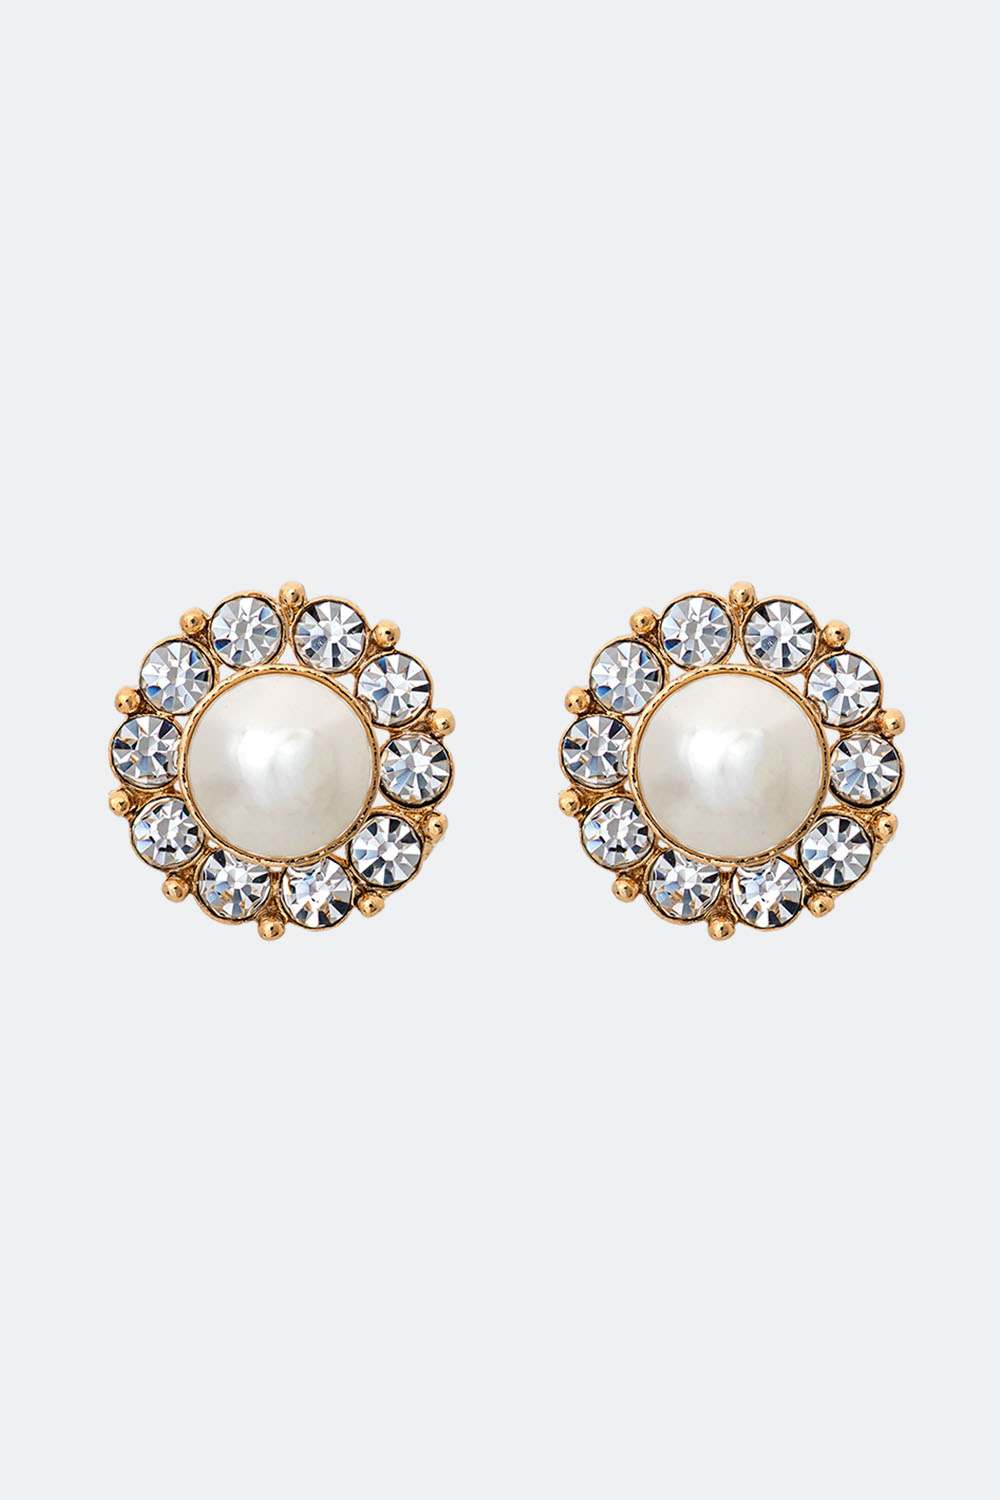 Miss Sofia pearl earrings - Ivory